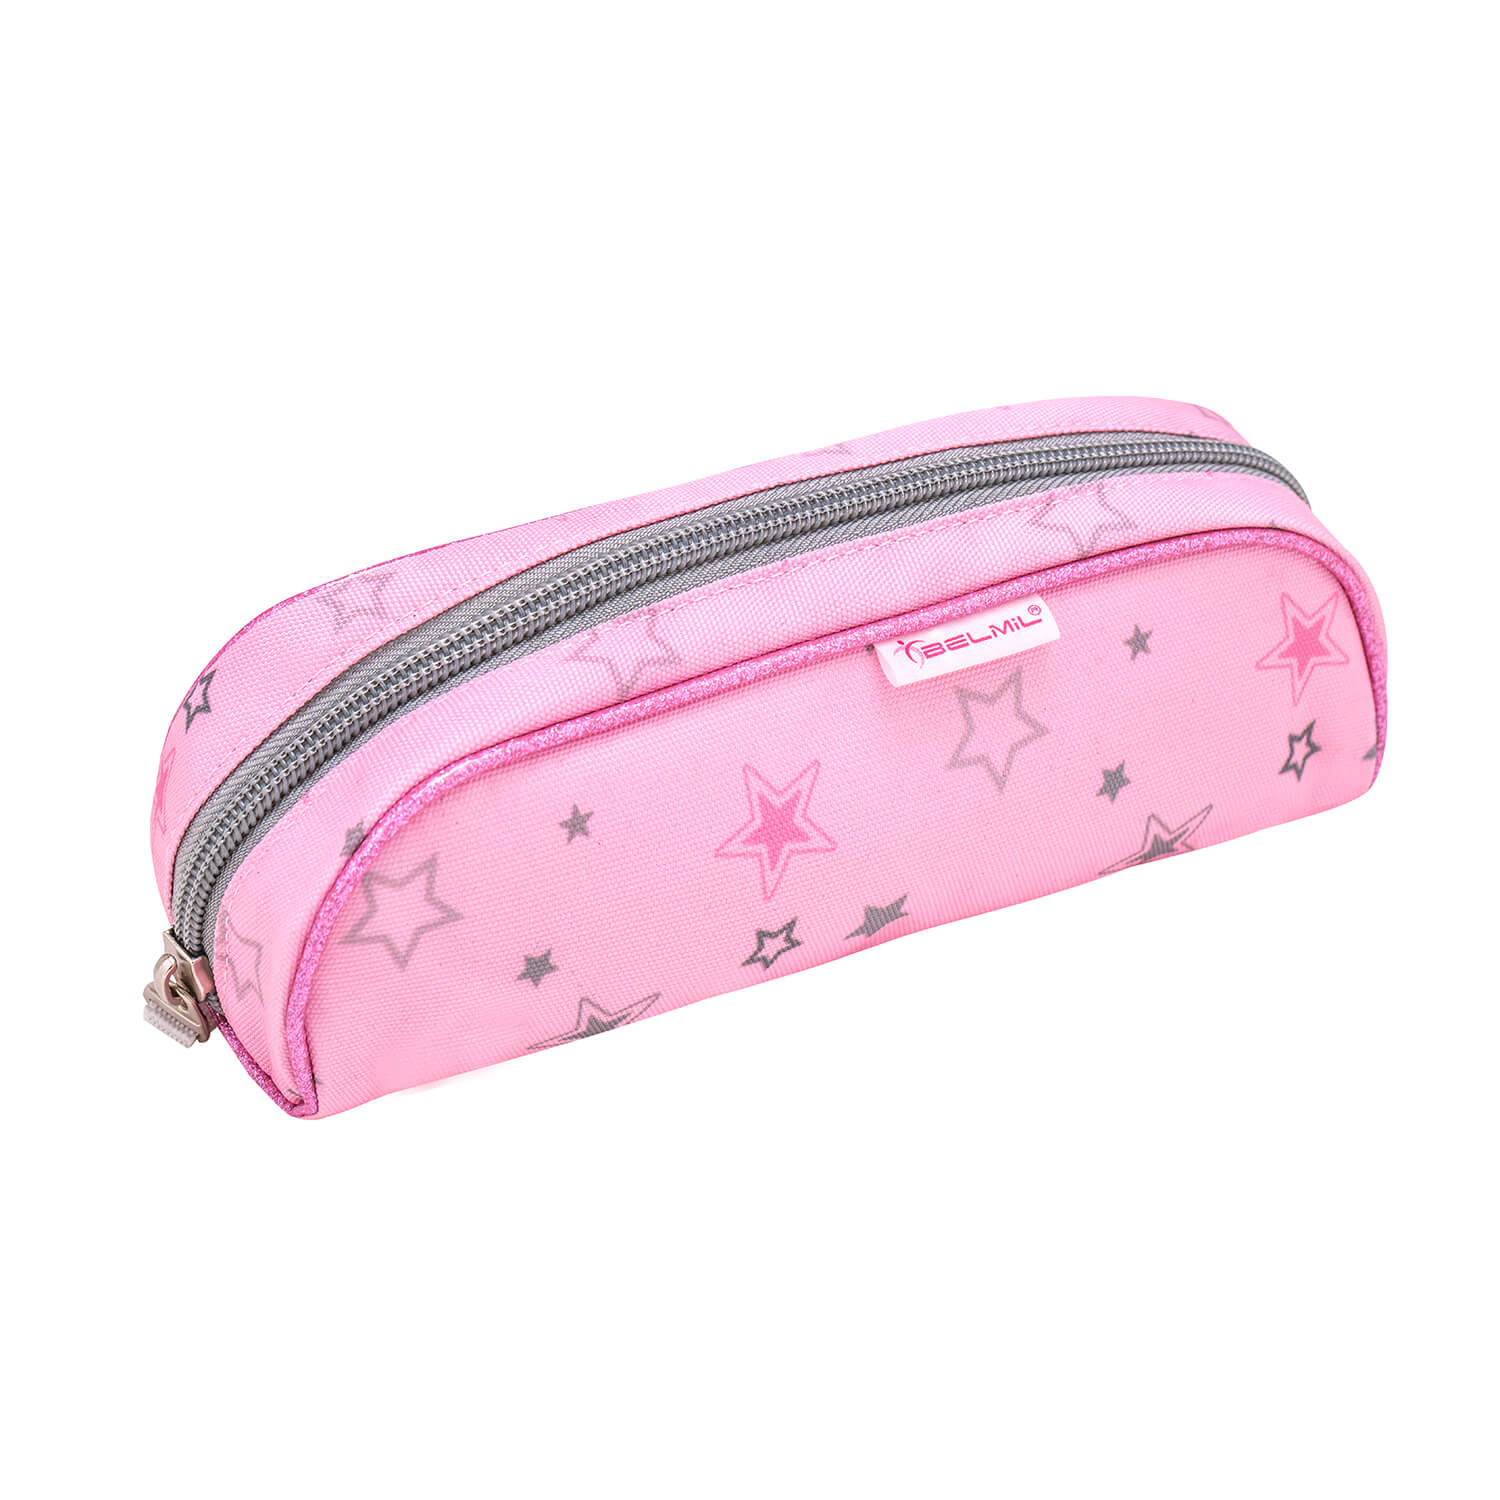 Mini-Fit Ballet Light Pink schoolbag set 4 pcs